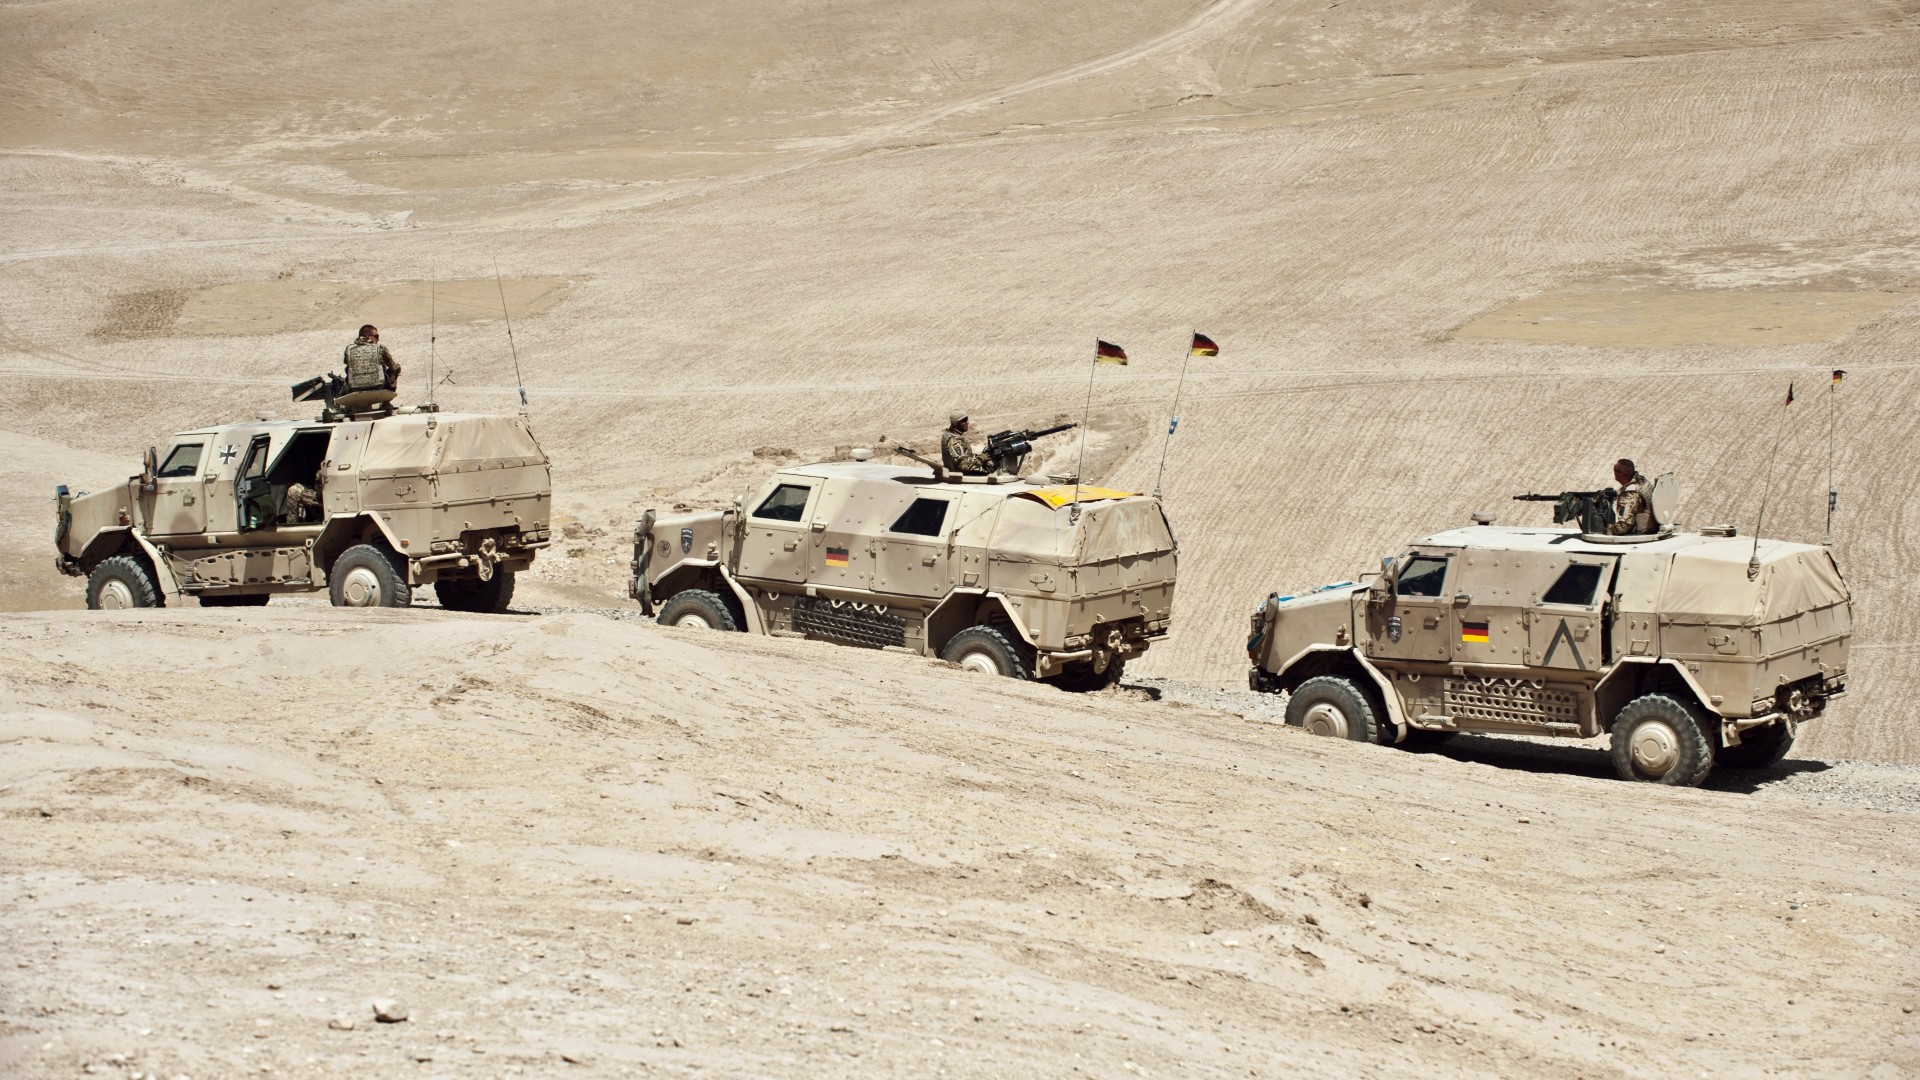 бронеавтомобиль, броневик, конвой, Афганистан, ATF Dingo, KMW, infantry mobility vehicle, MPPV PC, convoy, Afghanistan, Bundeswehr (horizontal)